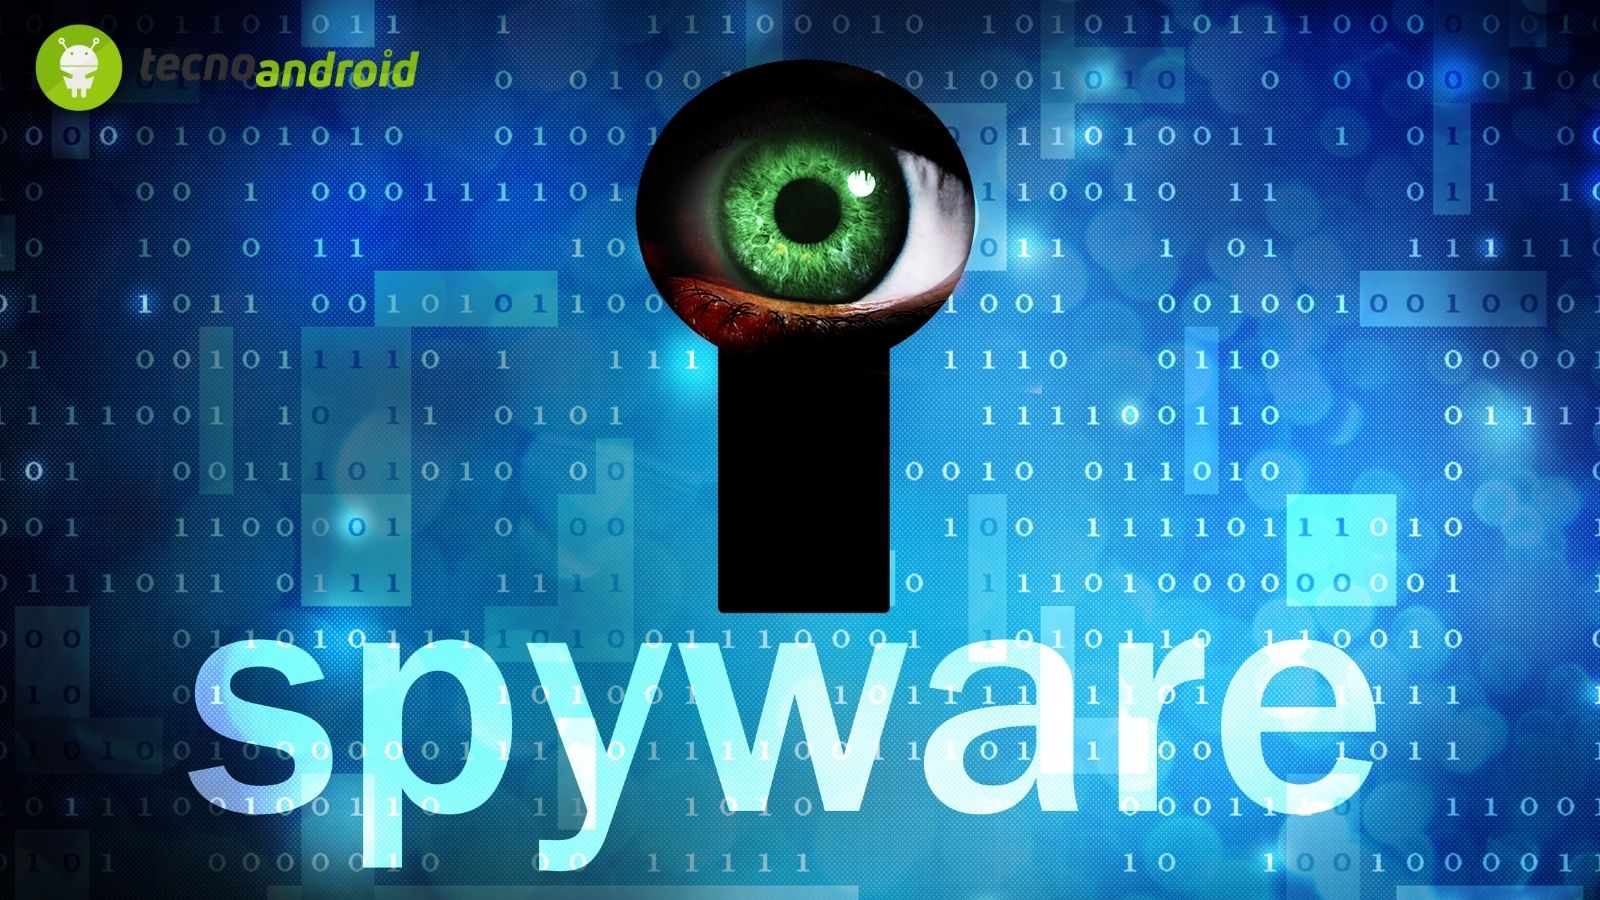 Allarme Sicurezza: Spyware VajraSpy colpisce App Android